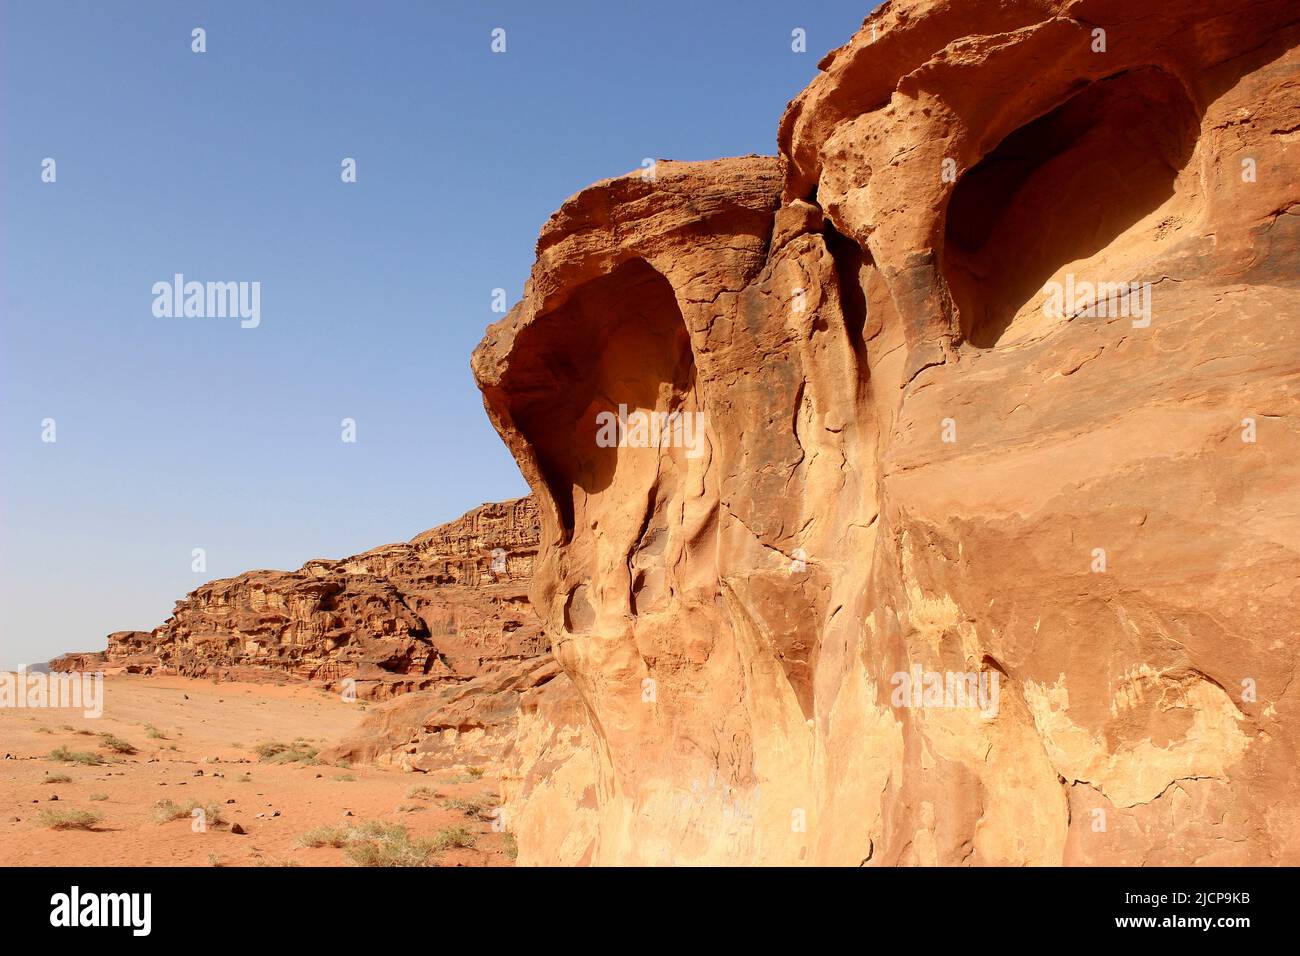 El Escarpment de la Roca de Sandstone de UM Sahn en Wadi Rum, Jordania Foto de stock